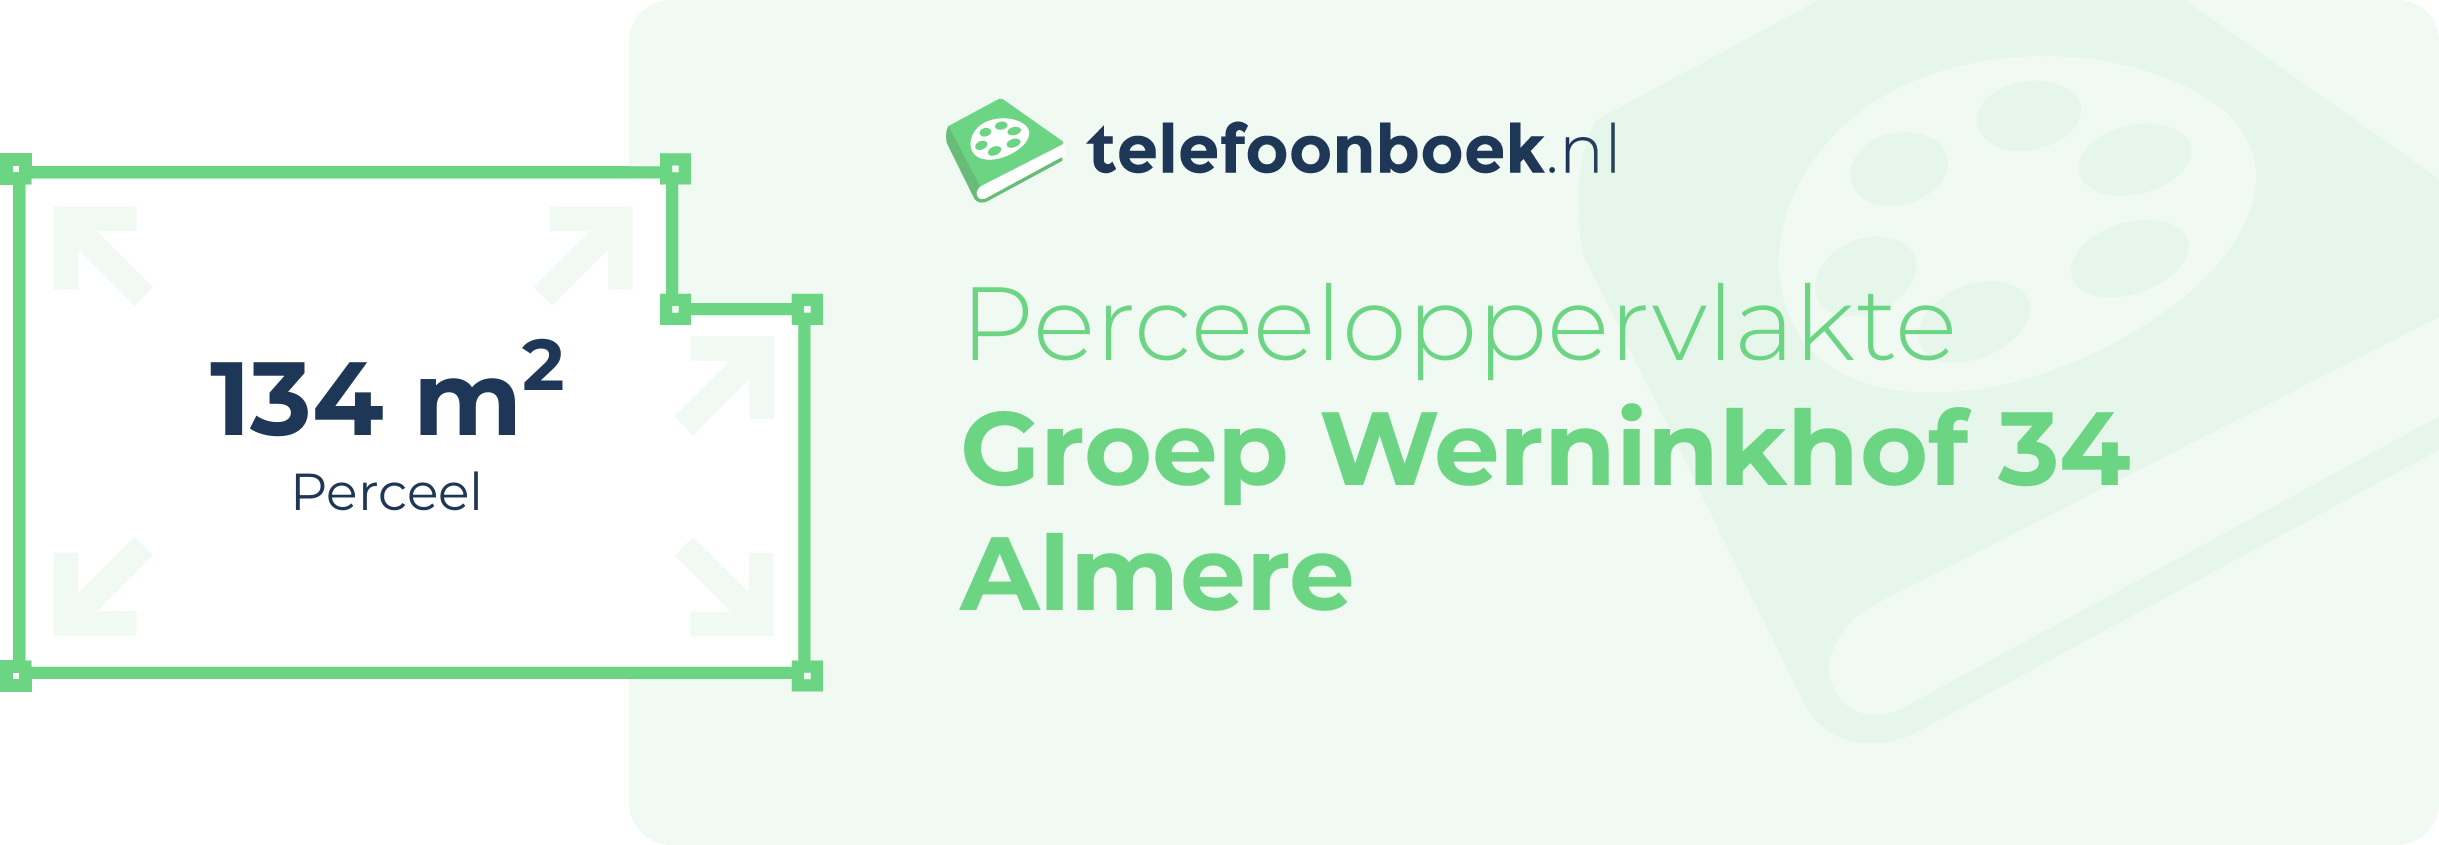 Perceeloppervlakte Groep Werninkhof 34 Almere